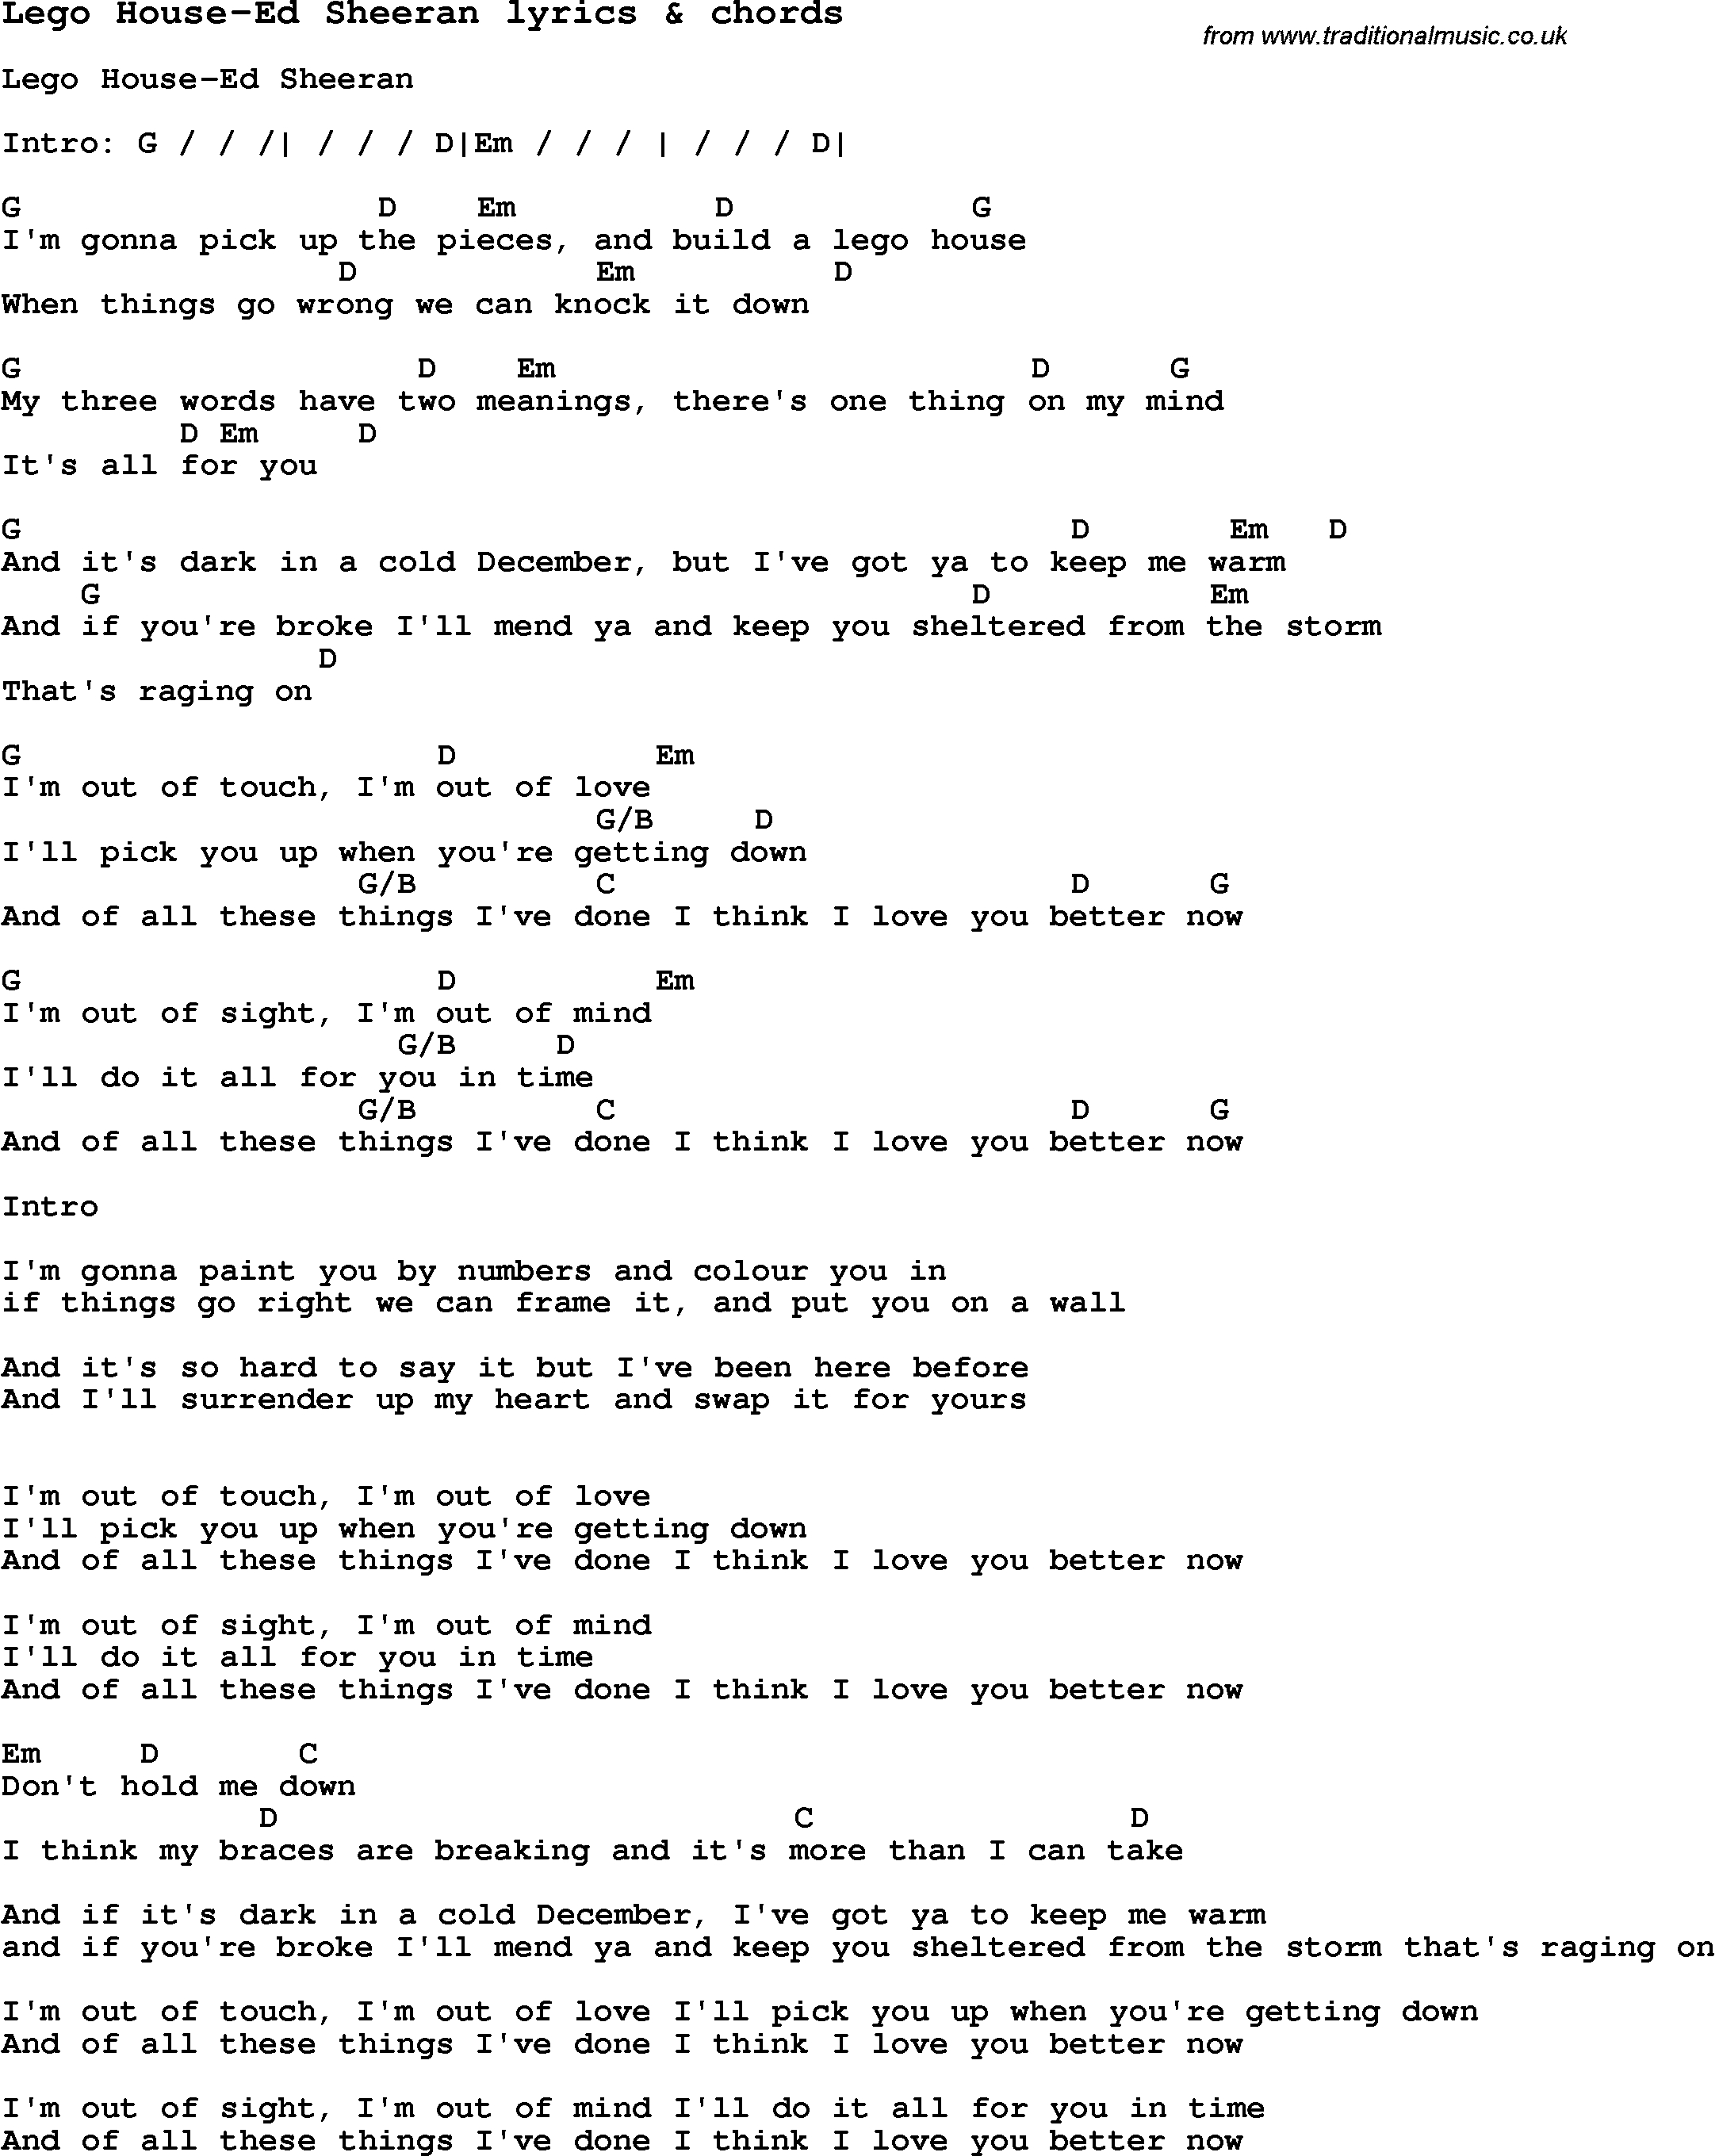 Lego House Chords Love Song Lyrics Forlego House Ed Sheeran With Chords